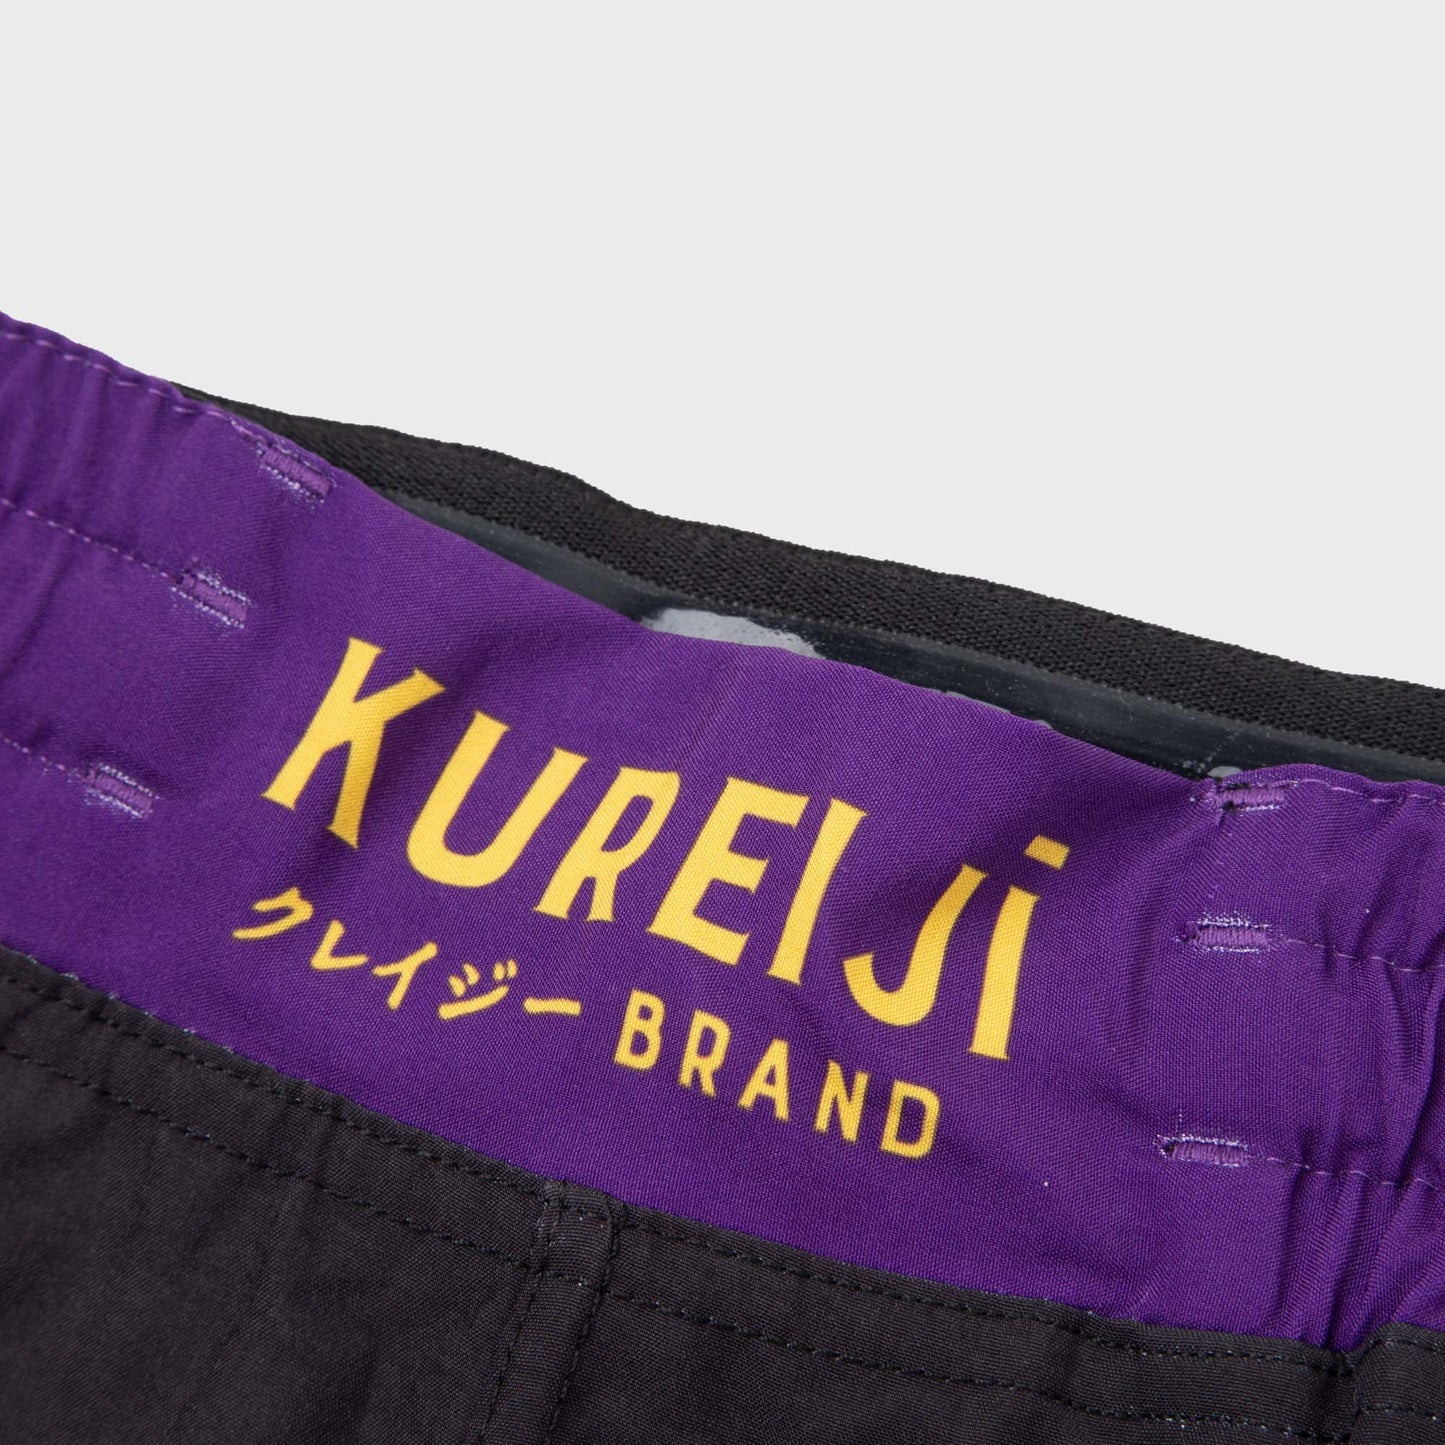 Kureiji BJJ Shorts - Kaiju LA Ramen